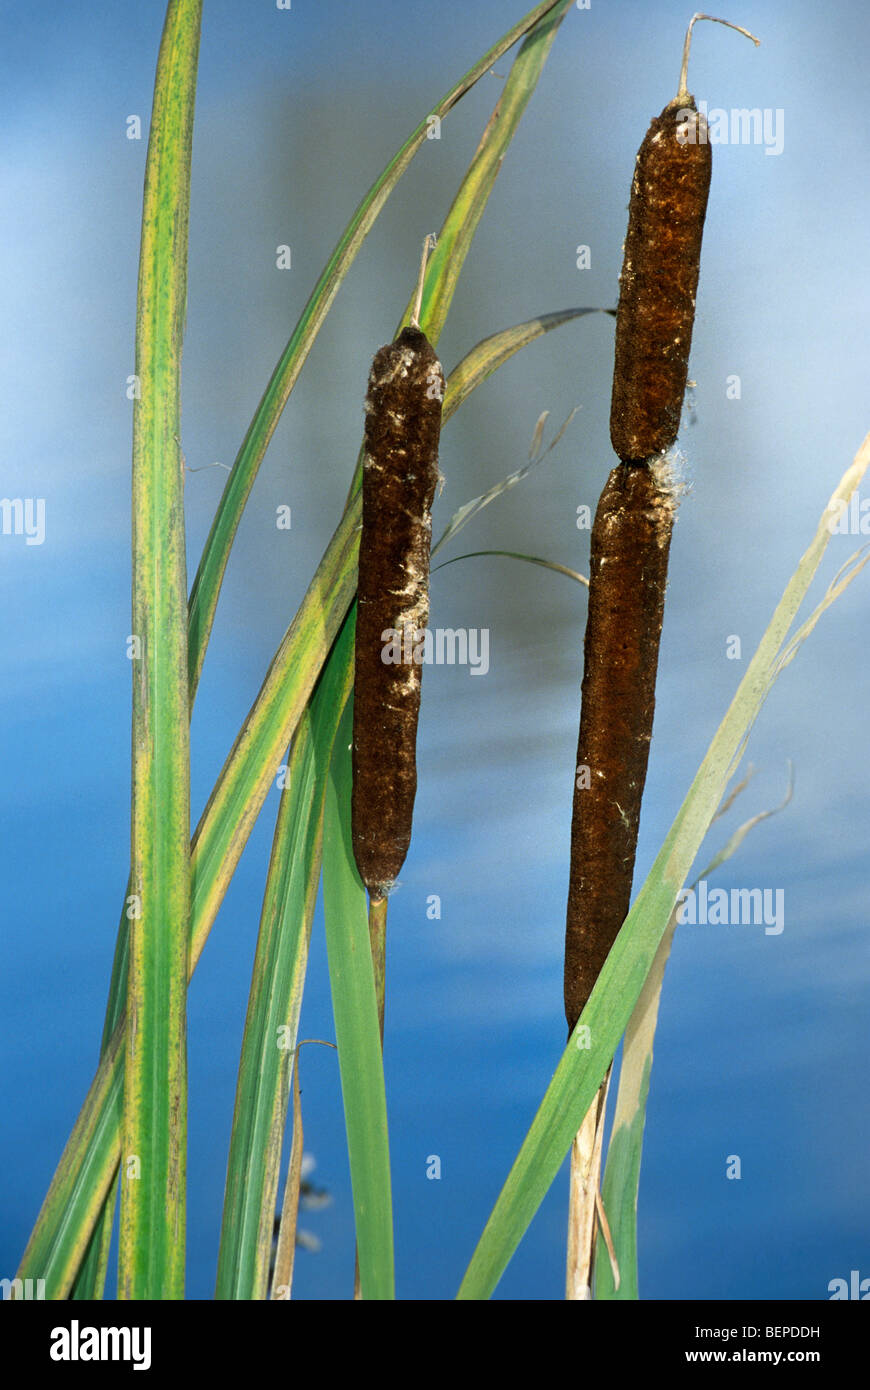 Greater bullrush / Reedmace seedhead / Broadleaf cattail (Typha latifolia) at the edge of lake Stock Photo